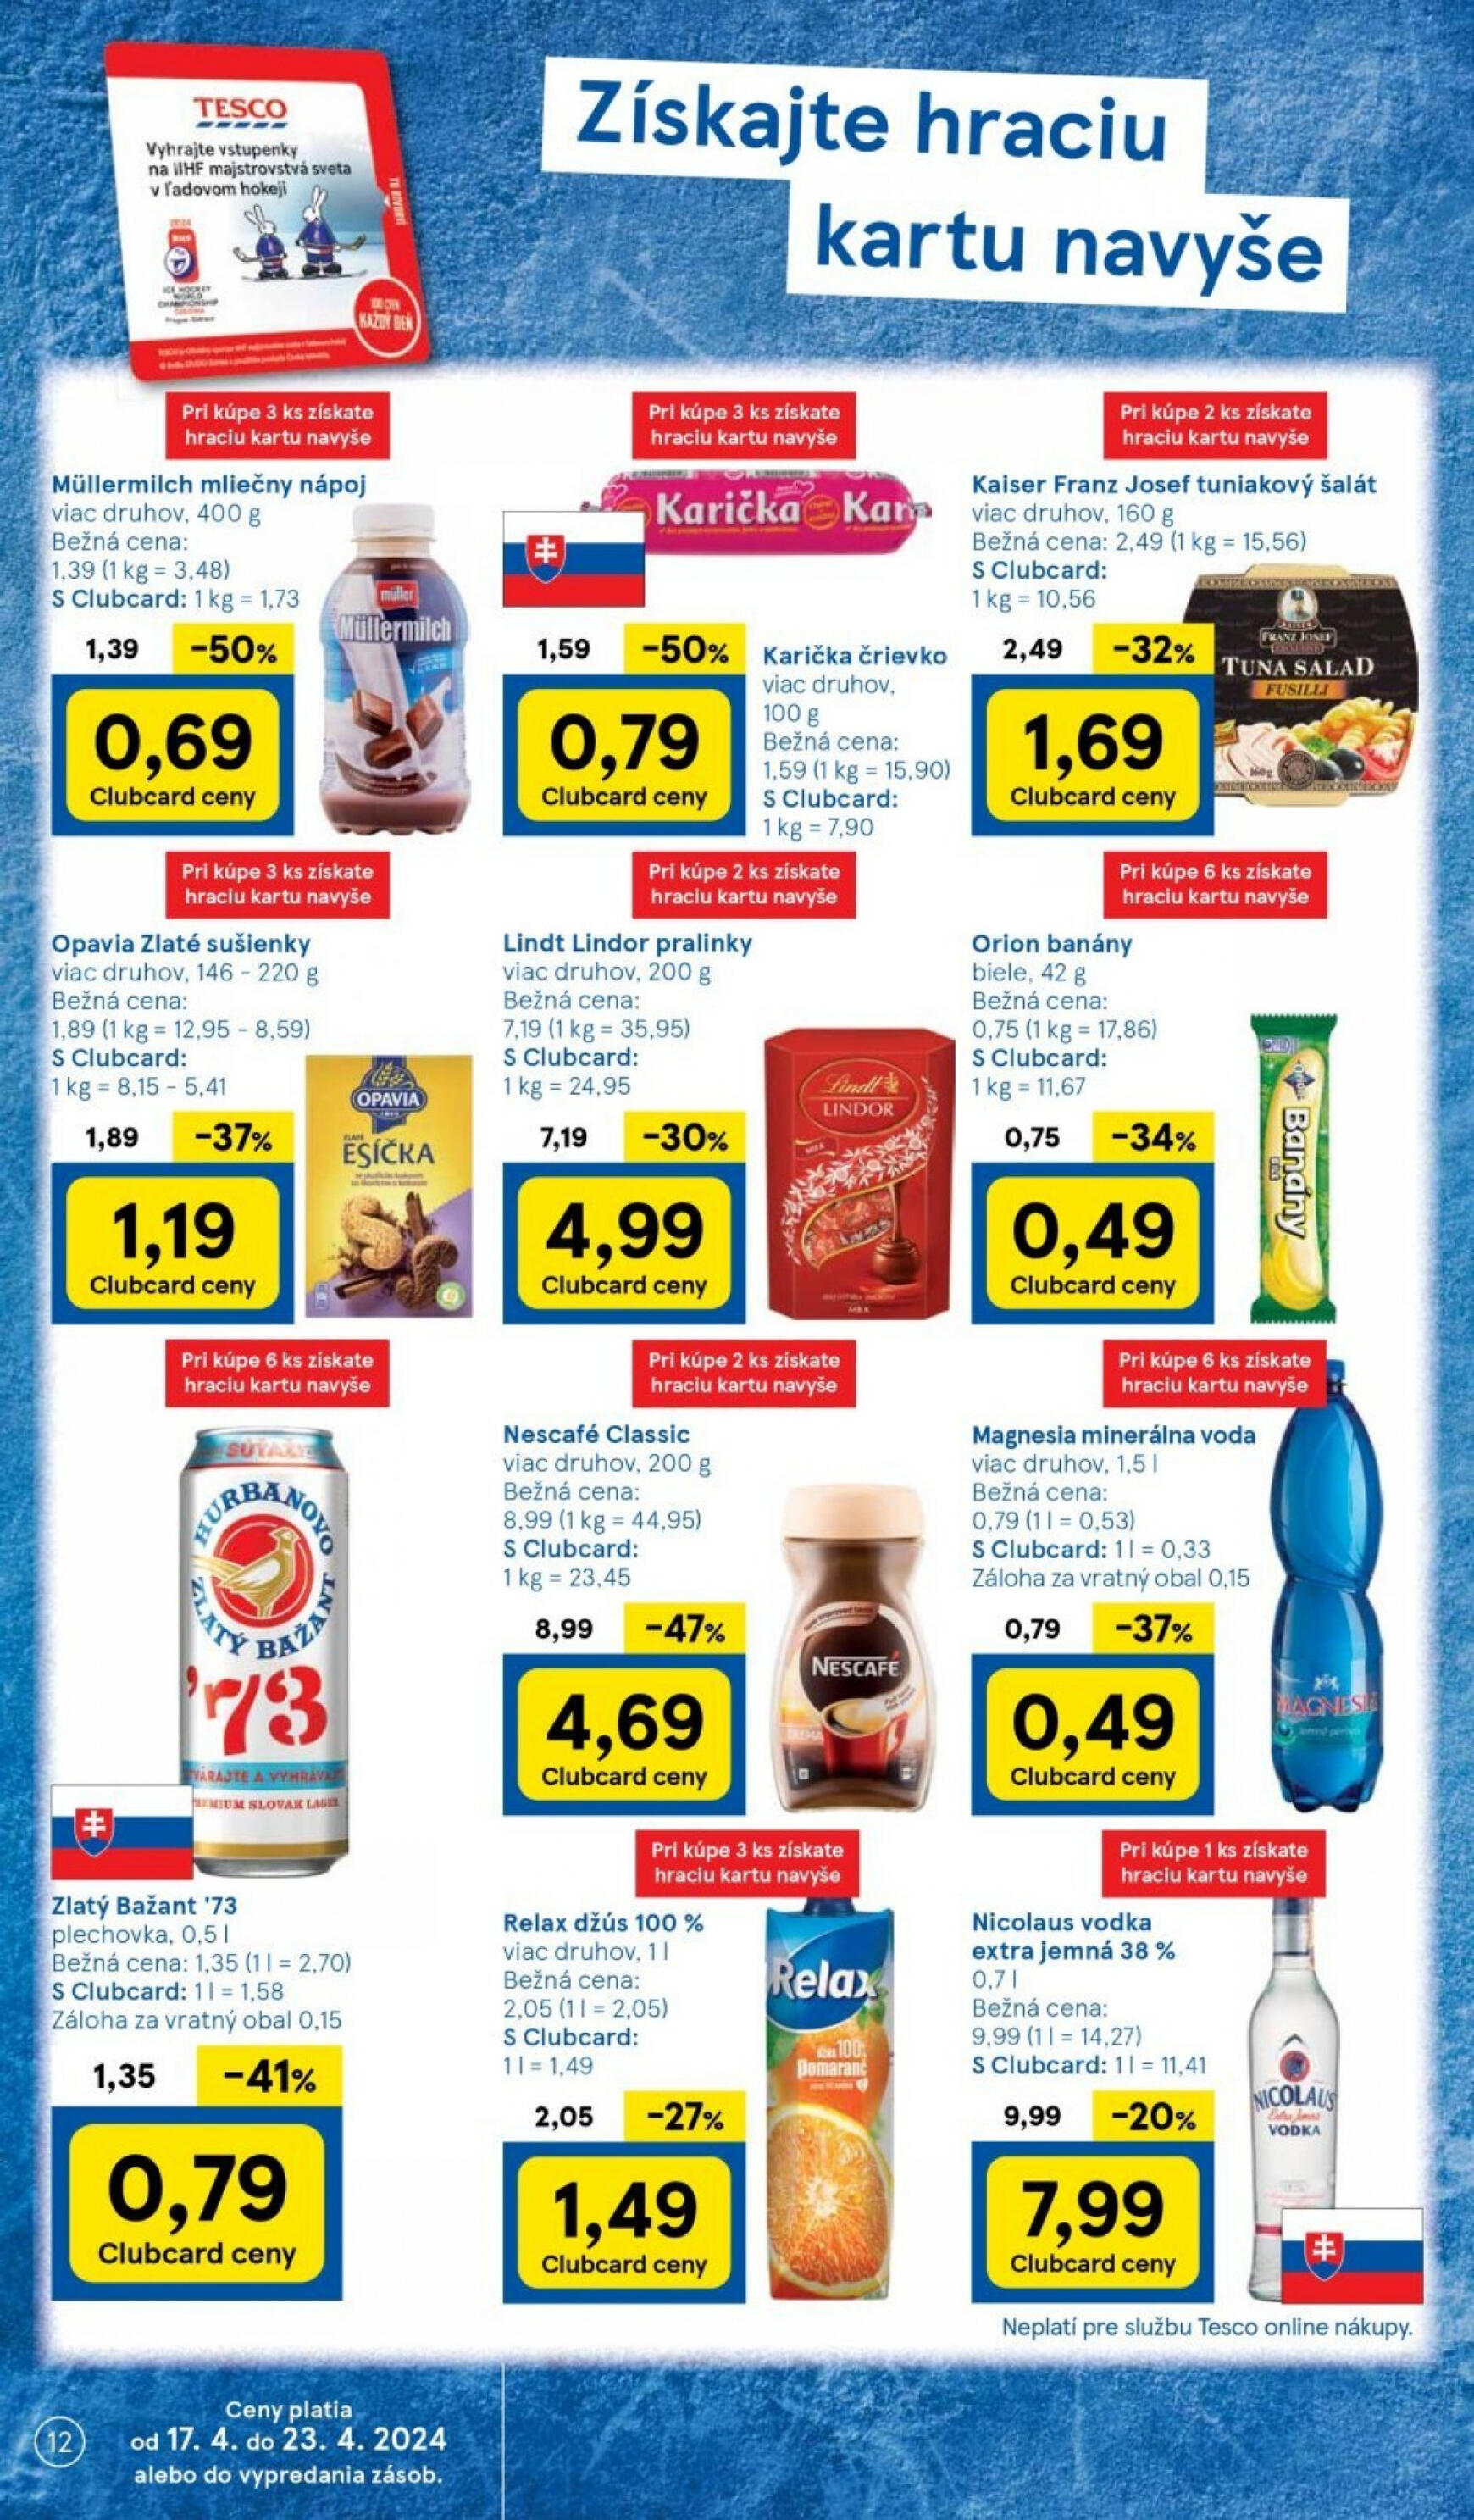 tesco - Tesco supermarket leták platný od 17.04. - 23.04. - page: 12